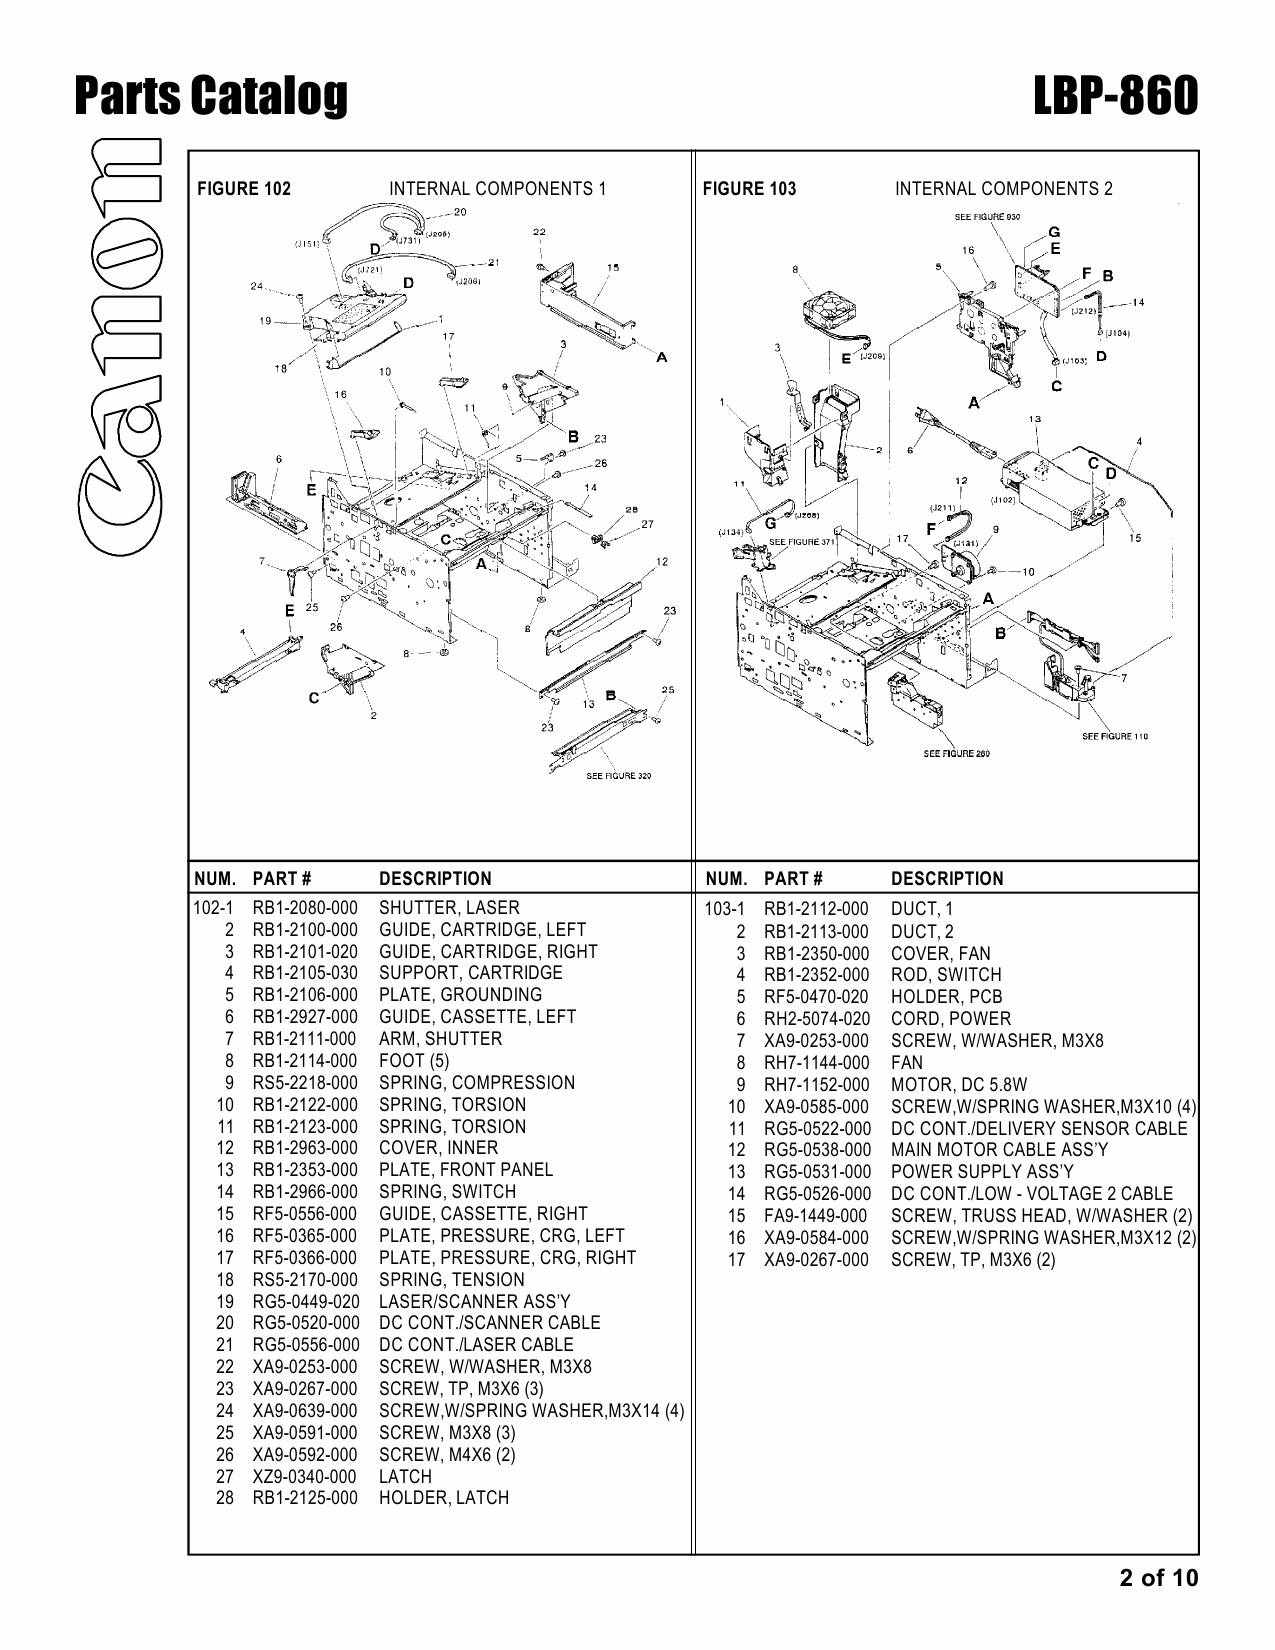 Canon imageCLASS LBP-860 Parts Catalog Manual-2